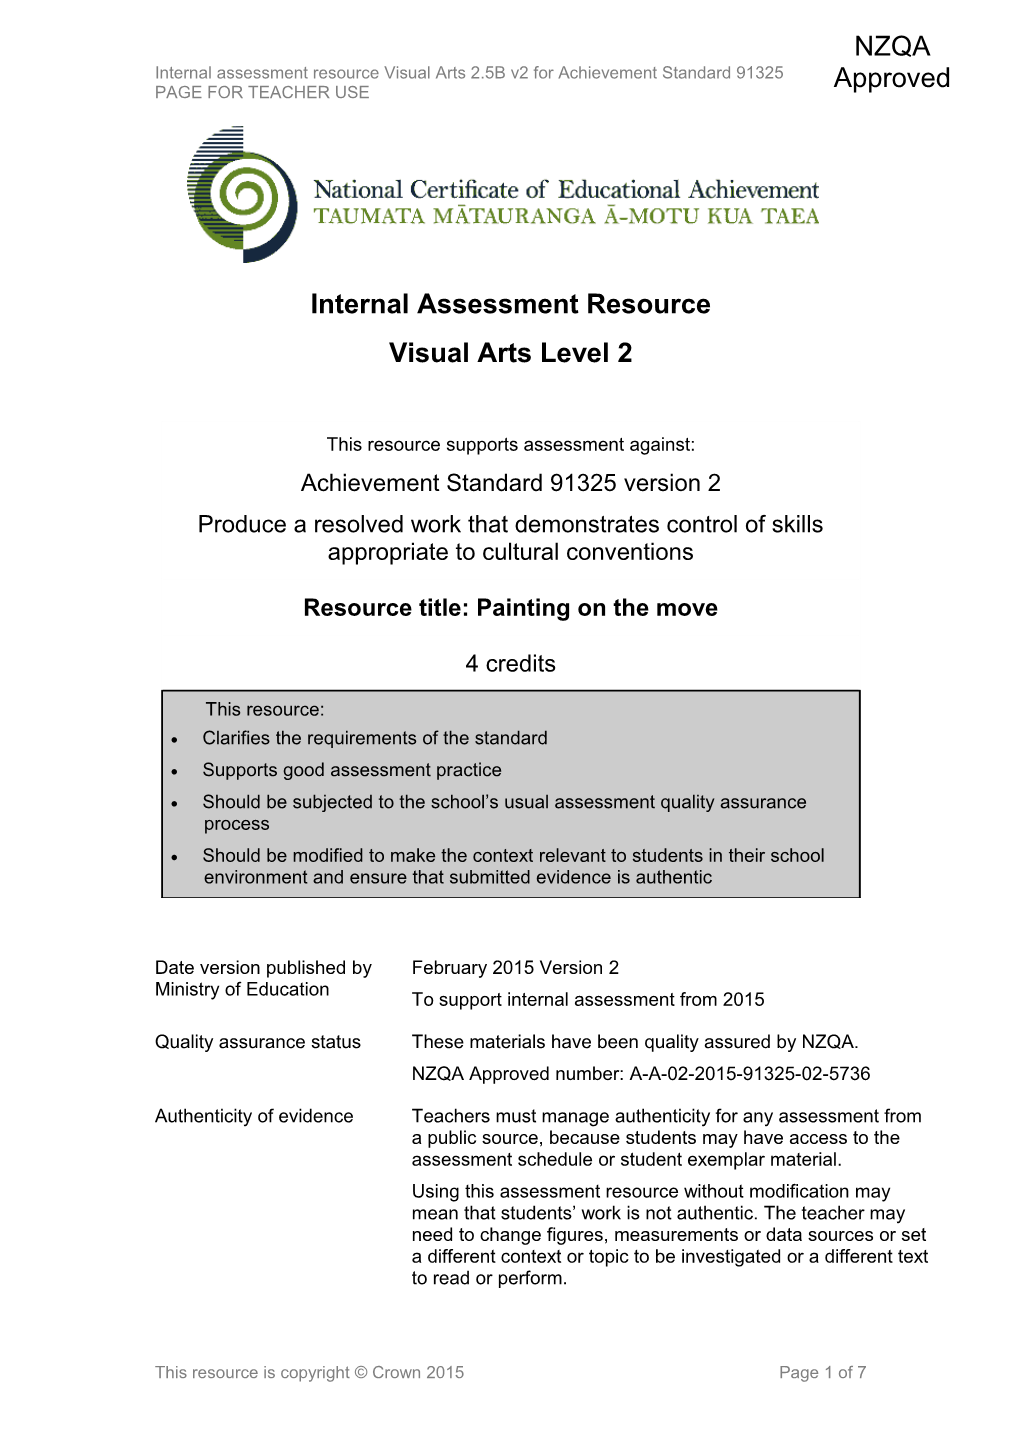 Level 2 Visual Arts Internal Assessment Resource